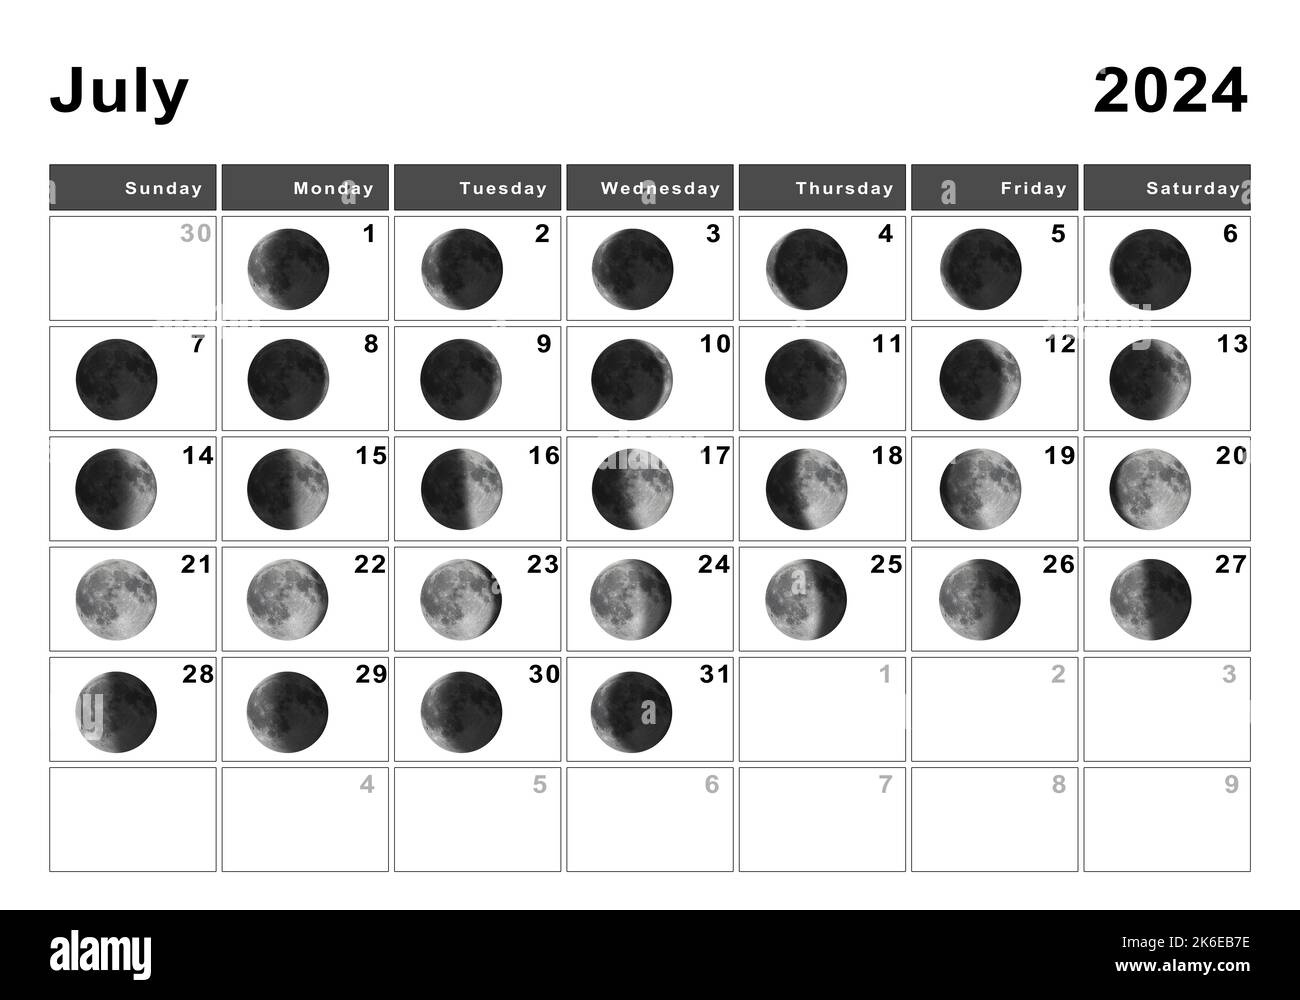 July 2024 Lunar Calendar, Moon Cycles, Moon Phases Stock Photo - Alamy for Moon July 2024 Calendar